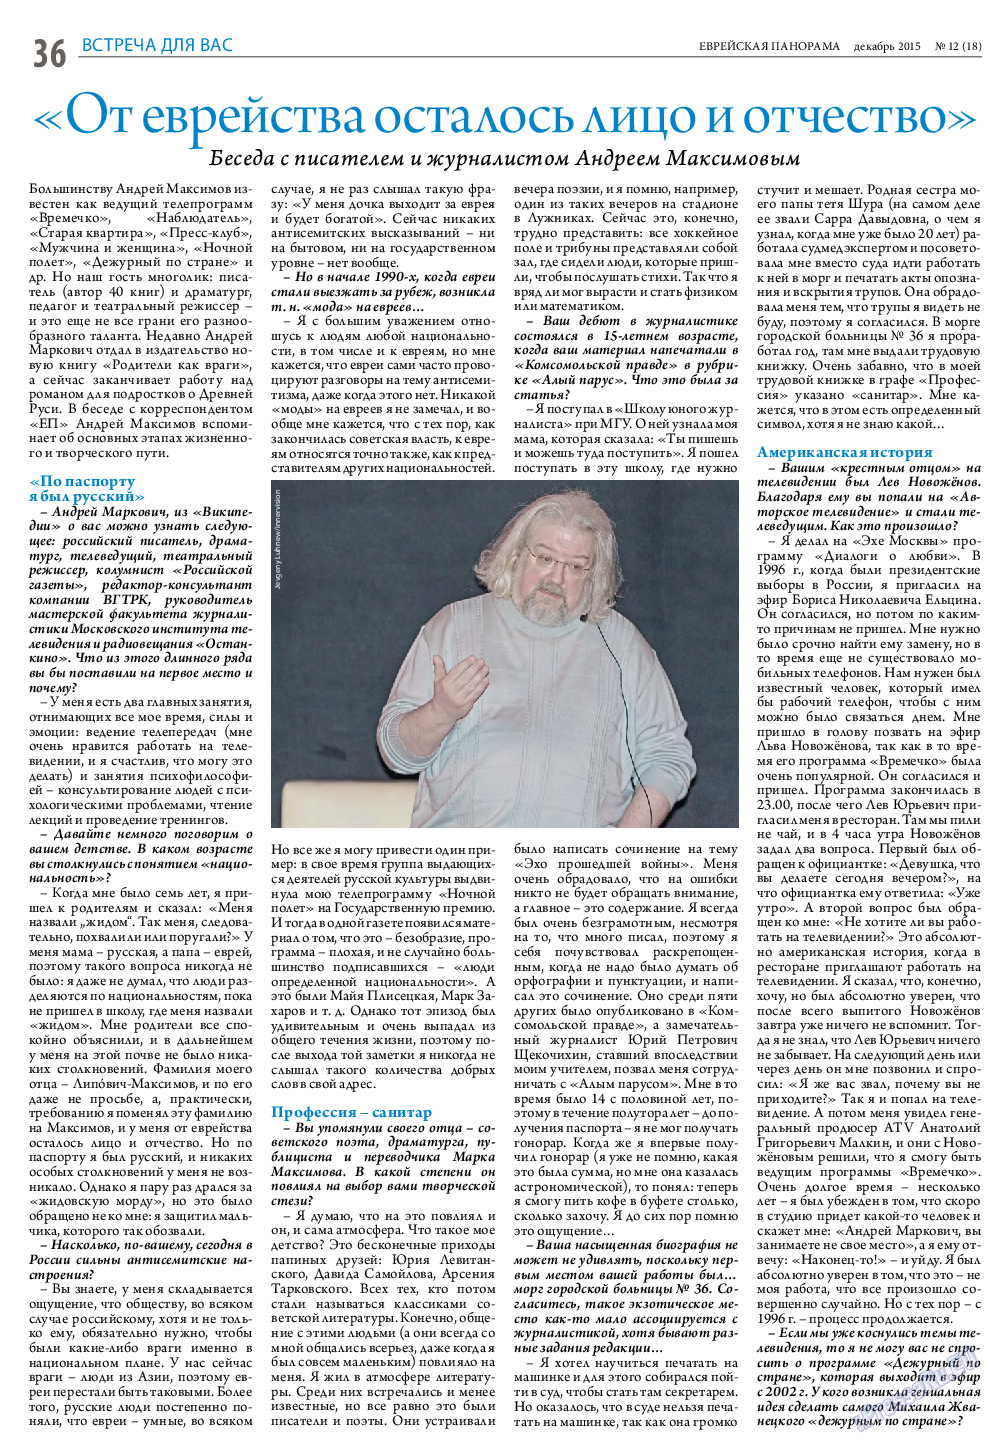 Еврейская панорама, газета. 2015 №12 стр.36